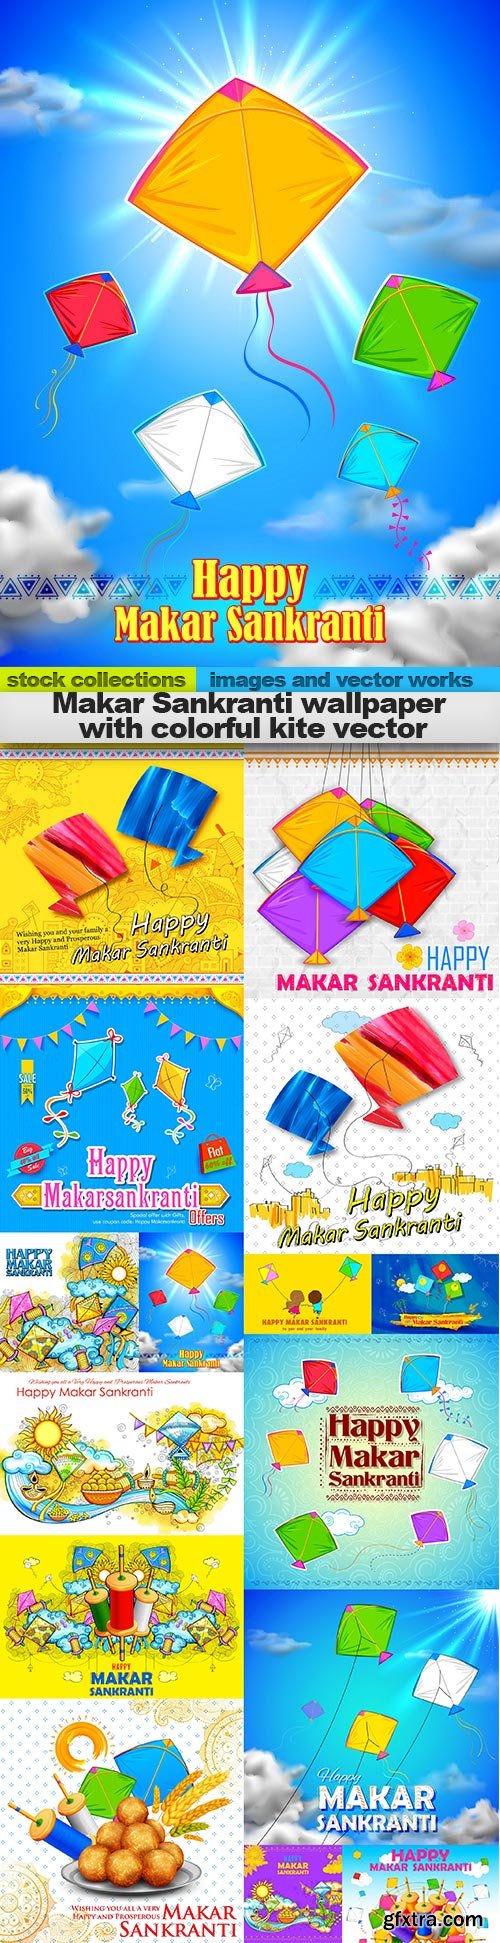 Makar Sankranti wallpaper with colorful kite vector, 15 x EPS